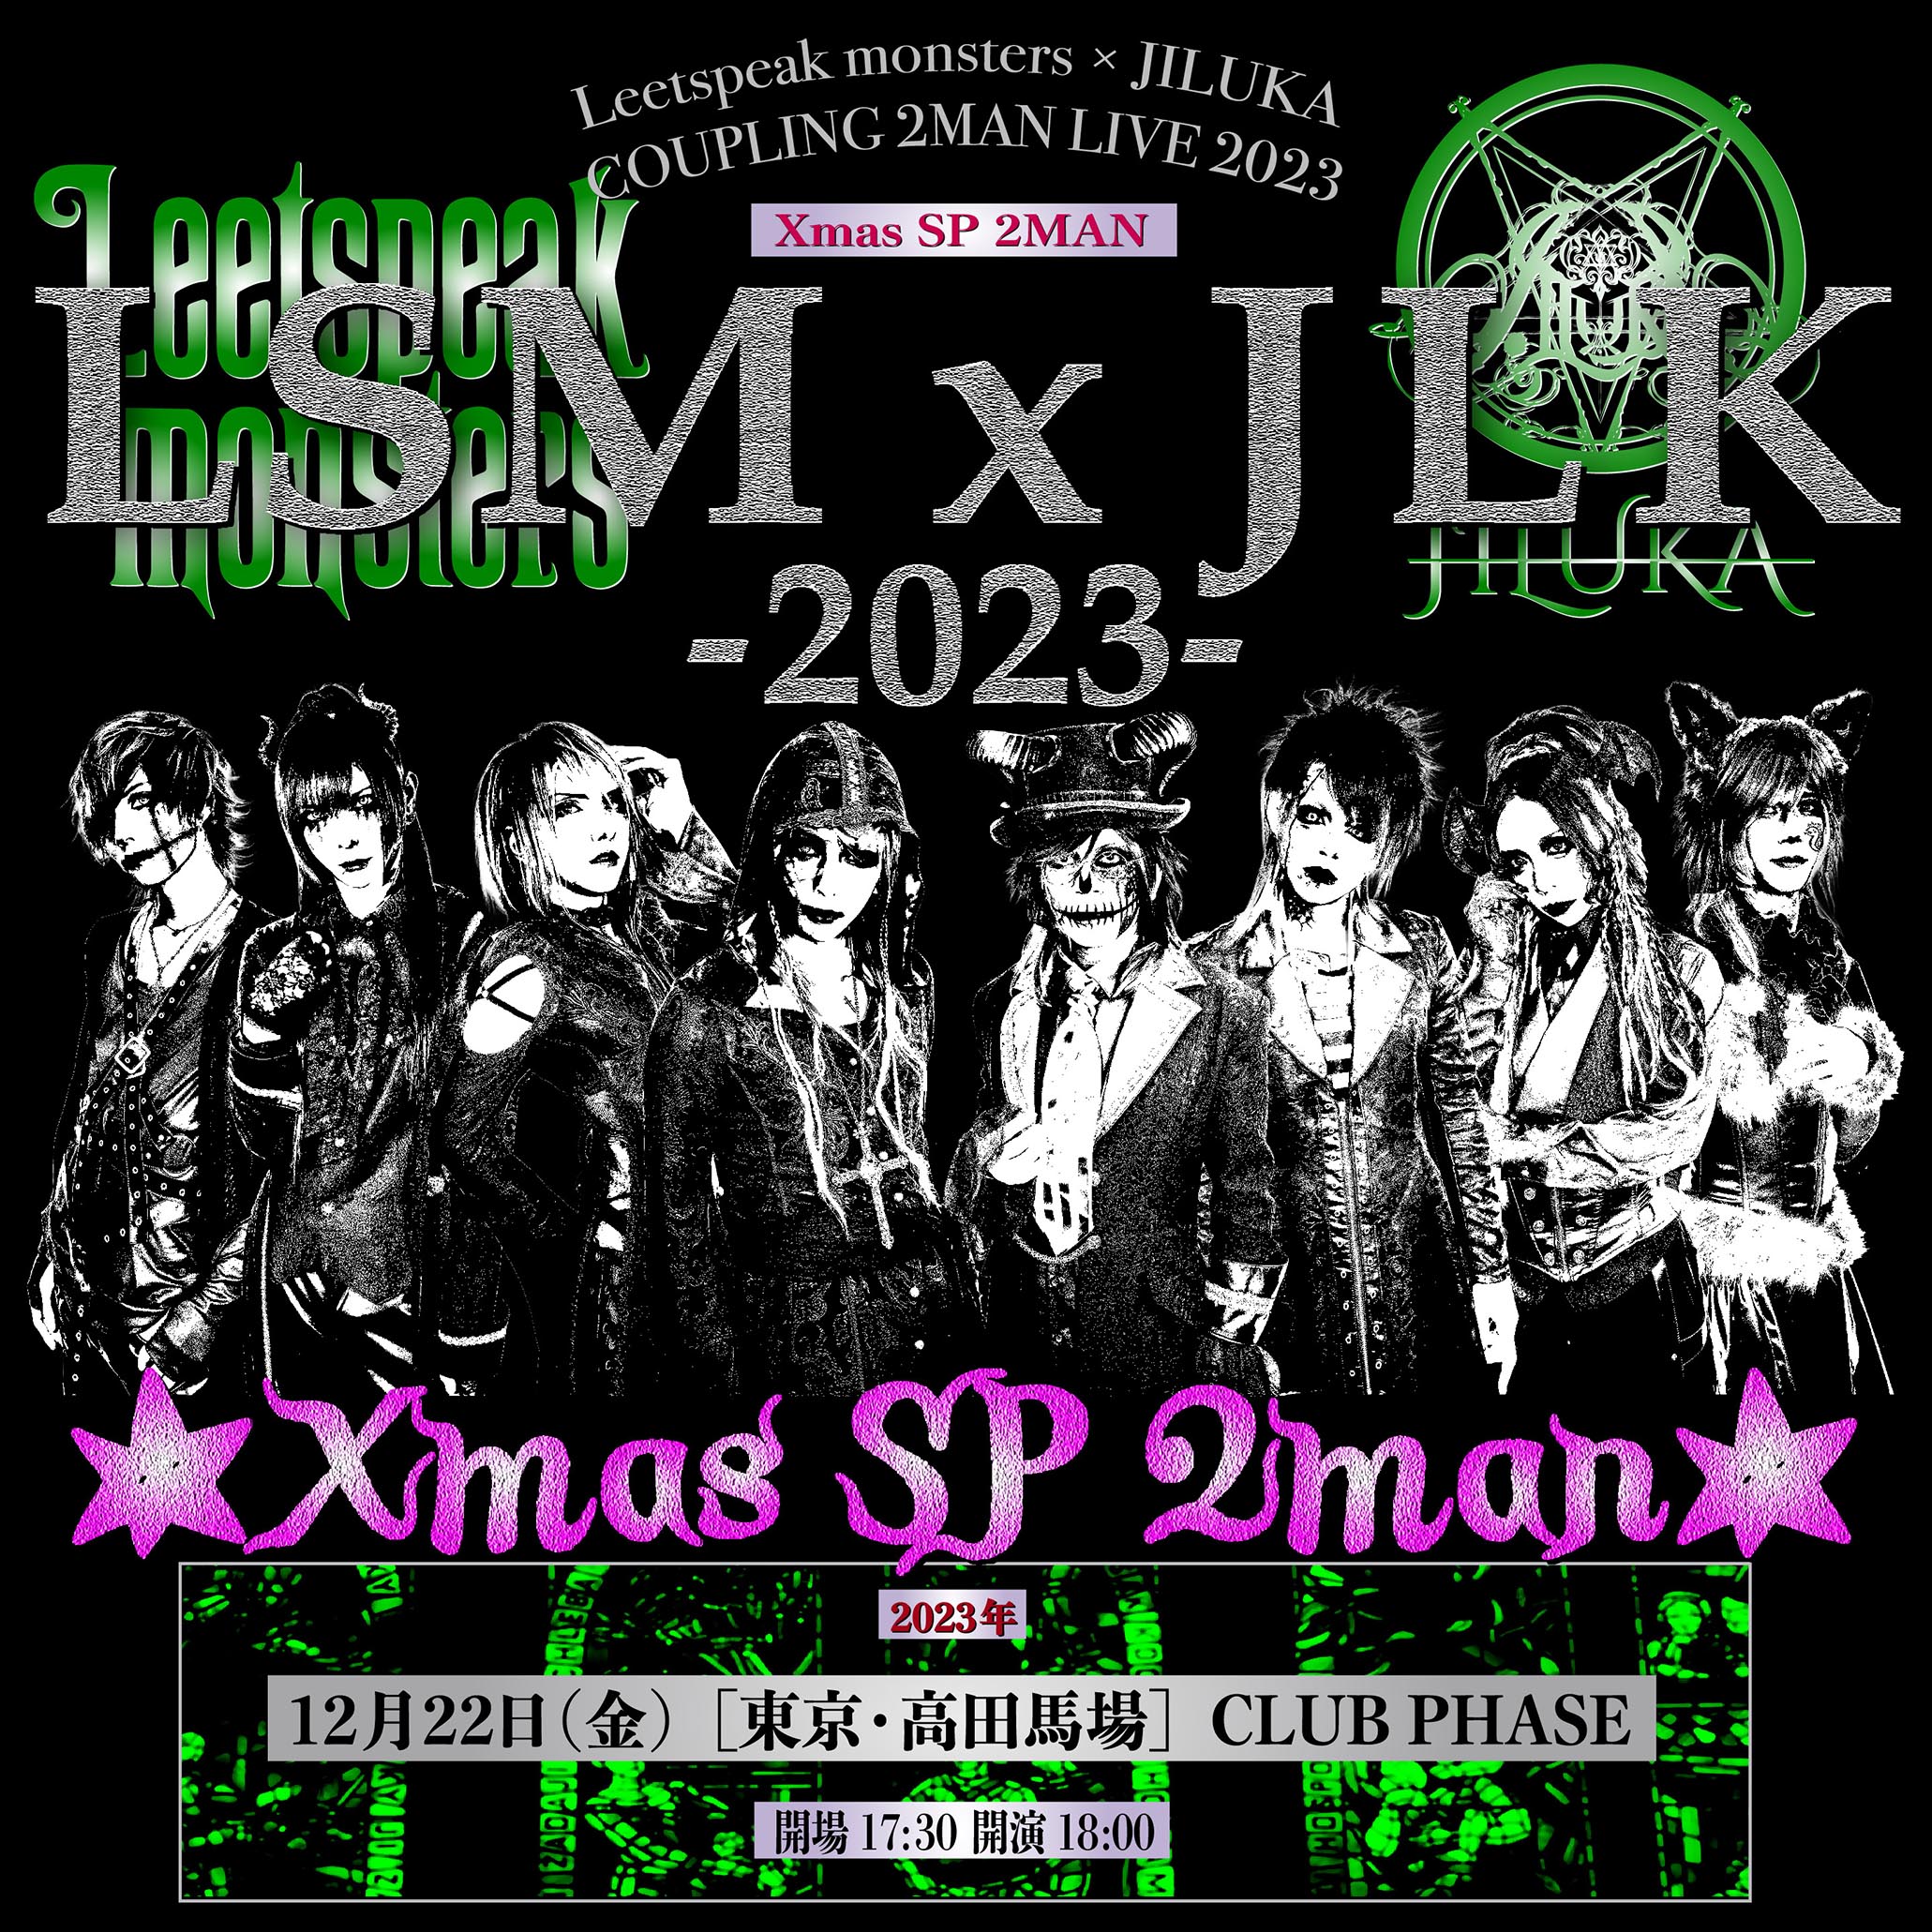 Leetspeak monsters × JILUKA :「LSM x JLK 2023」★Xmas SP 2man★